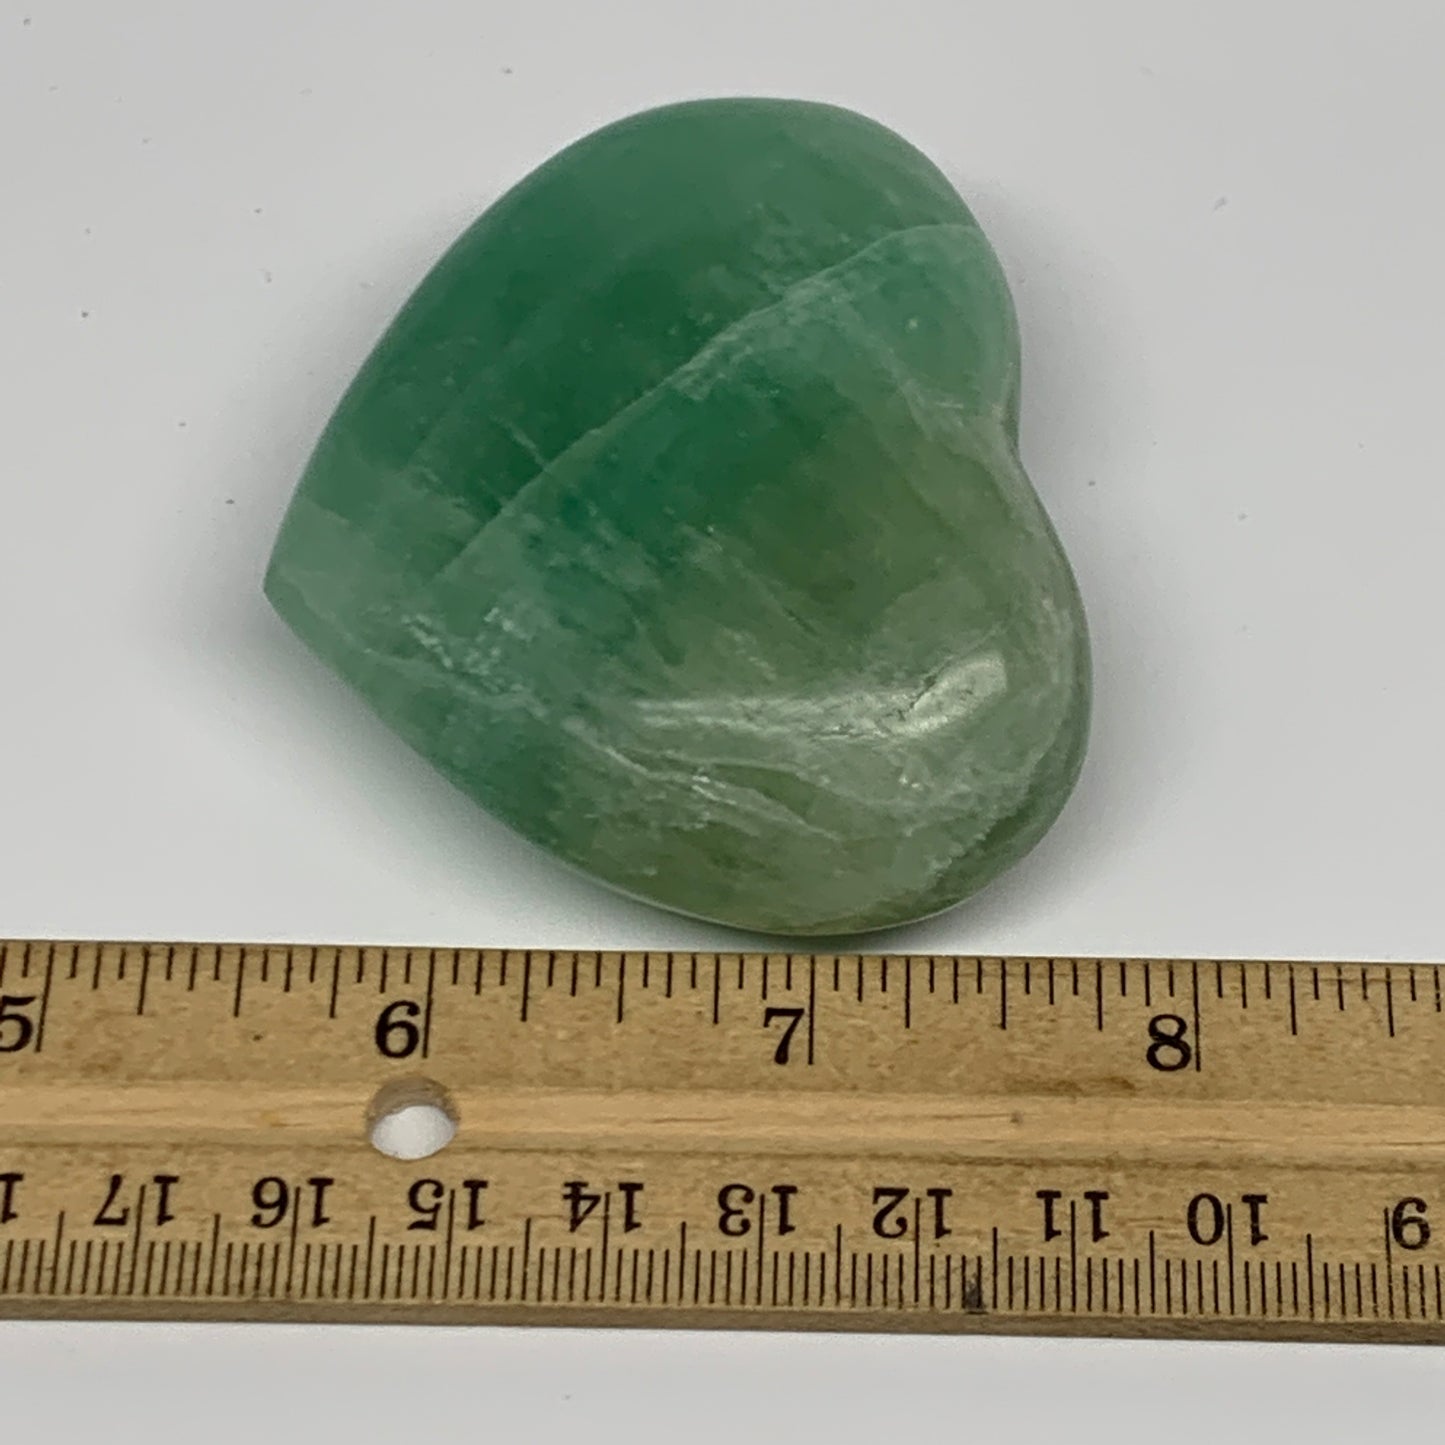 150.8g, 2.1" x 2.6" x 1" Fluorite Heart Healing Crystal @Madagascar, B17370